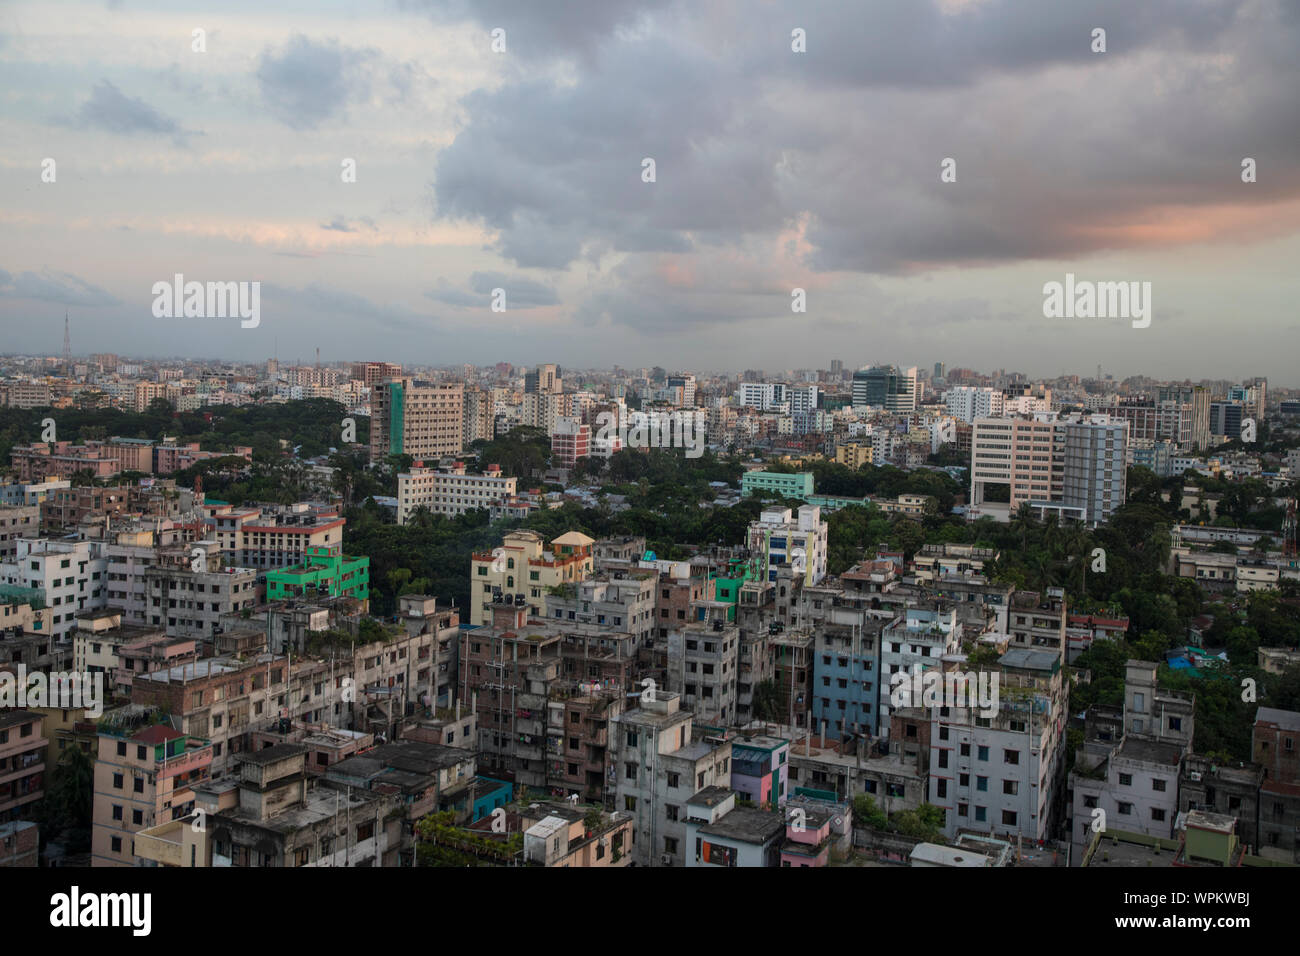 Aerial view of Dhaka, the Capital city of Bangladesh. Stock Photo